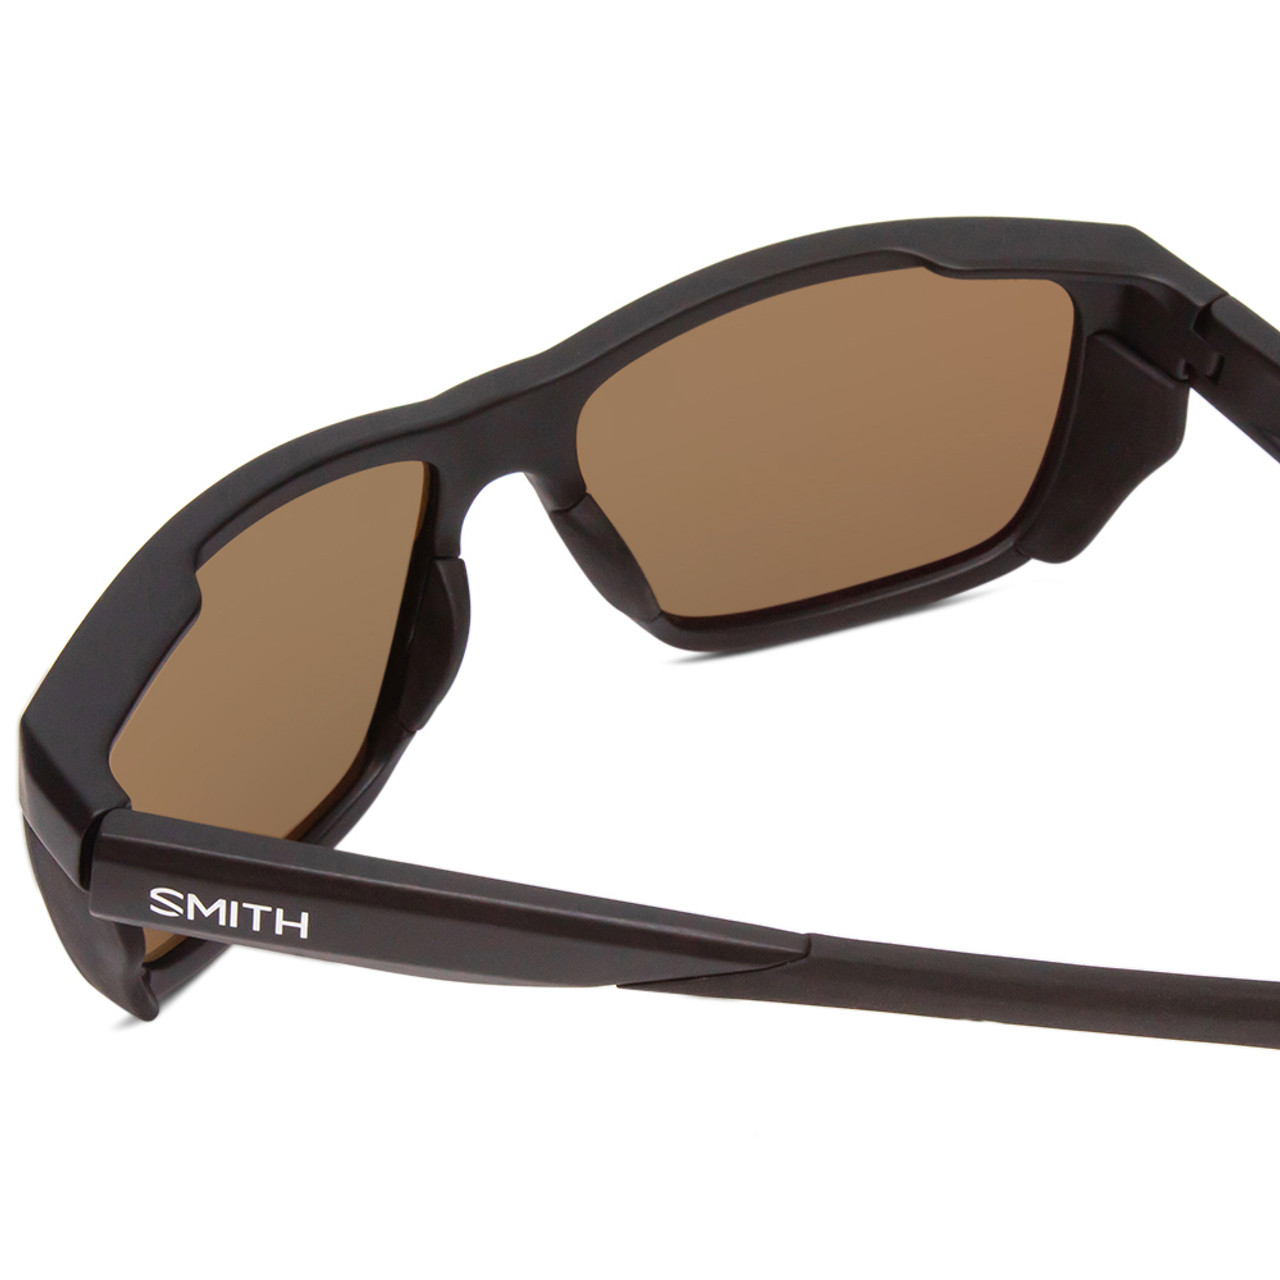 Close Up View of Smith Longfin Unisex Wrap Sunglasses Black/ChromaPop Polarized Gray Green 59 mm